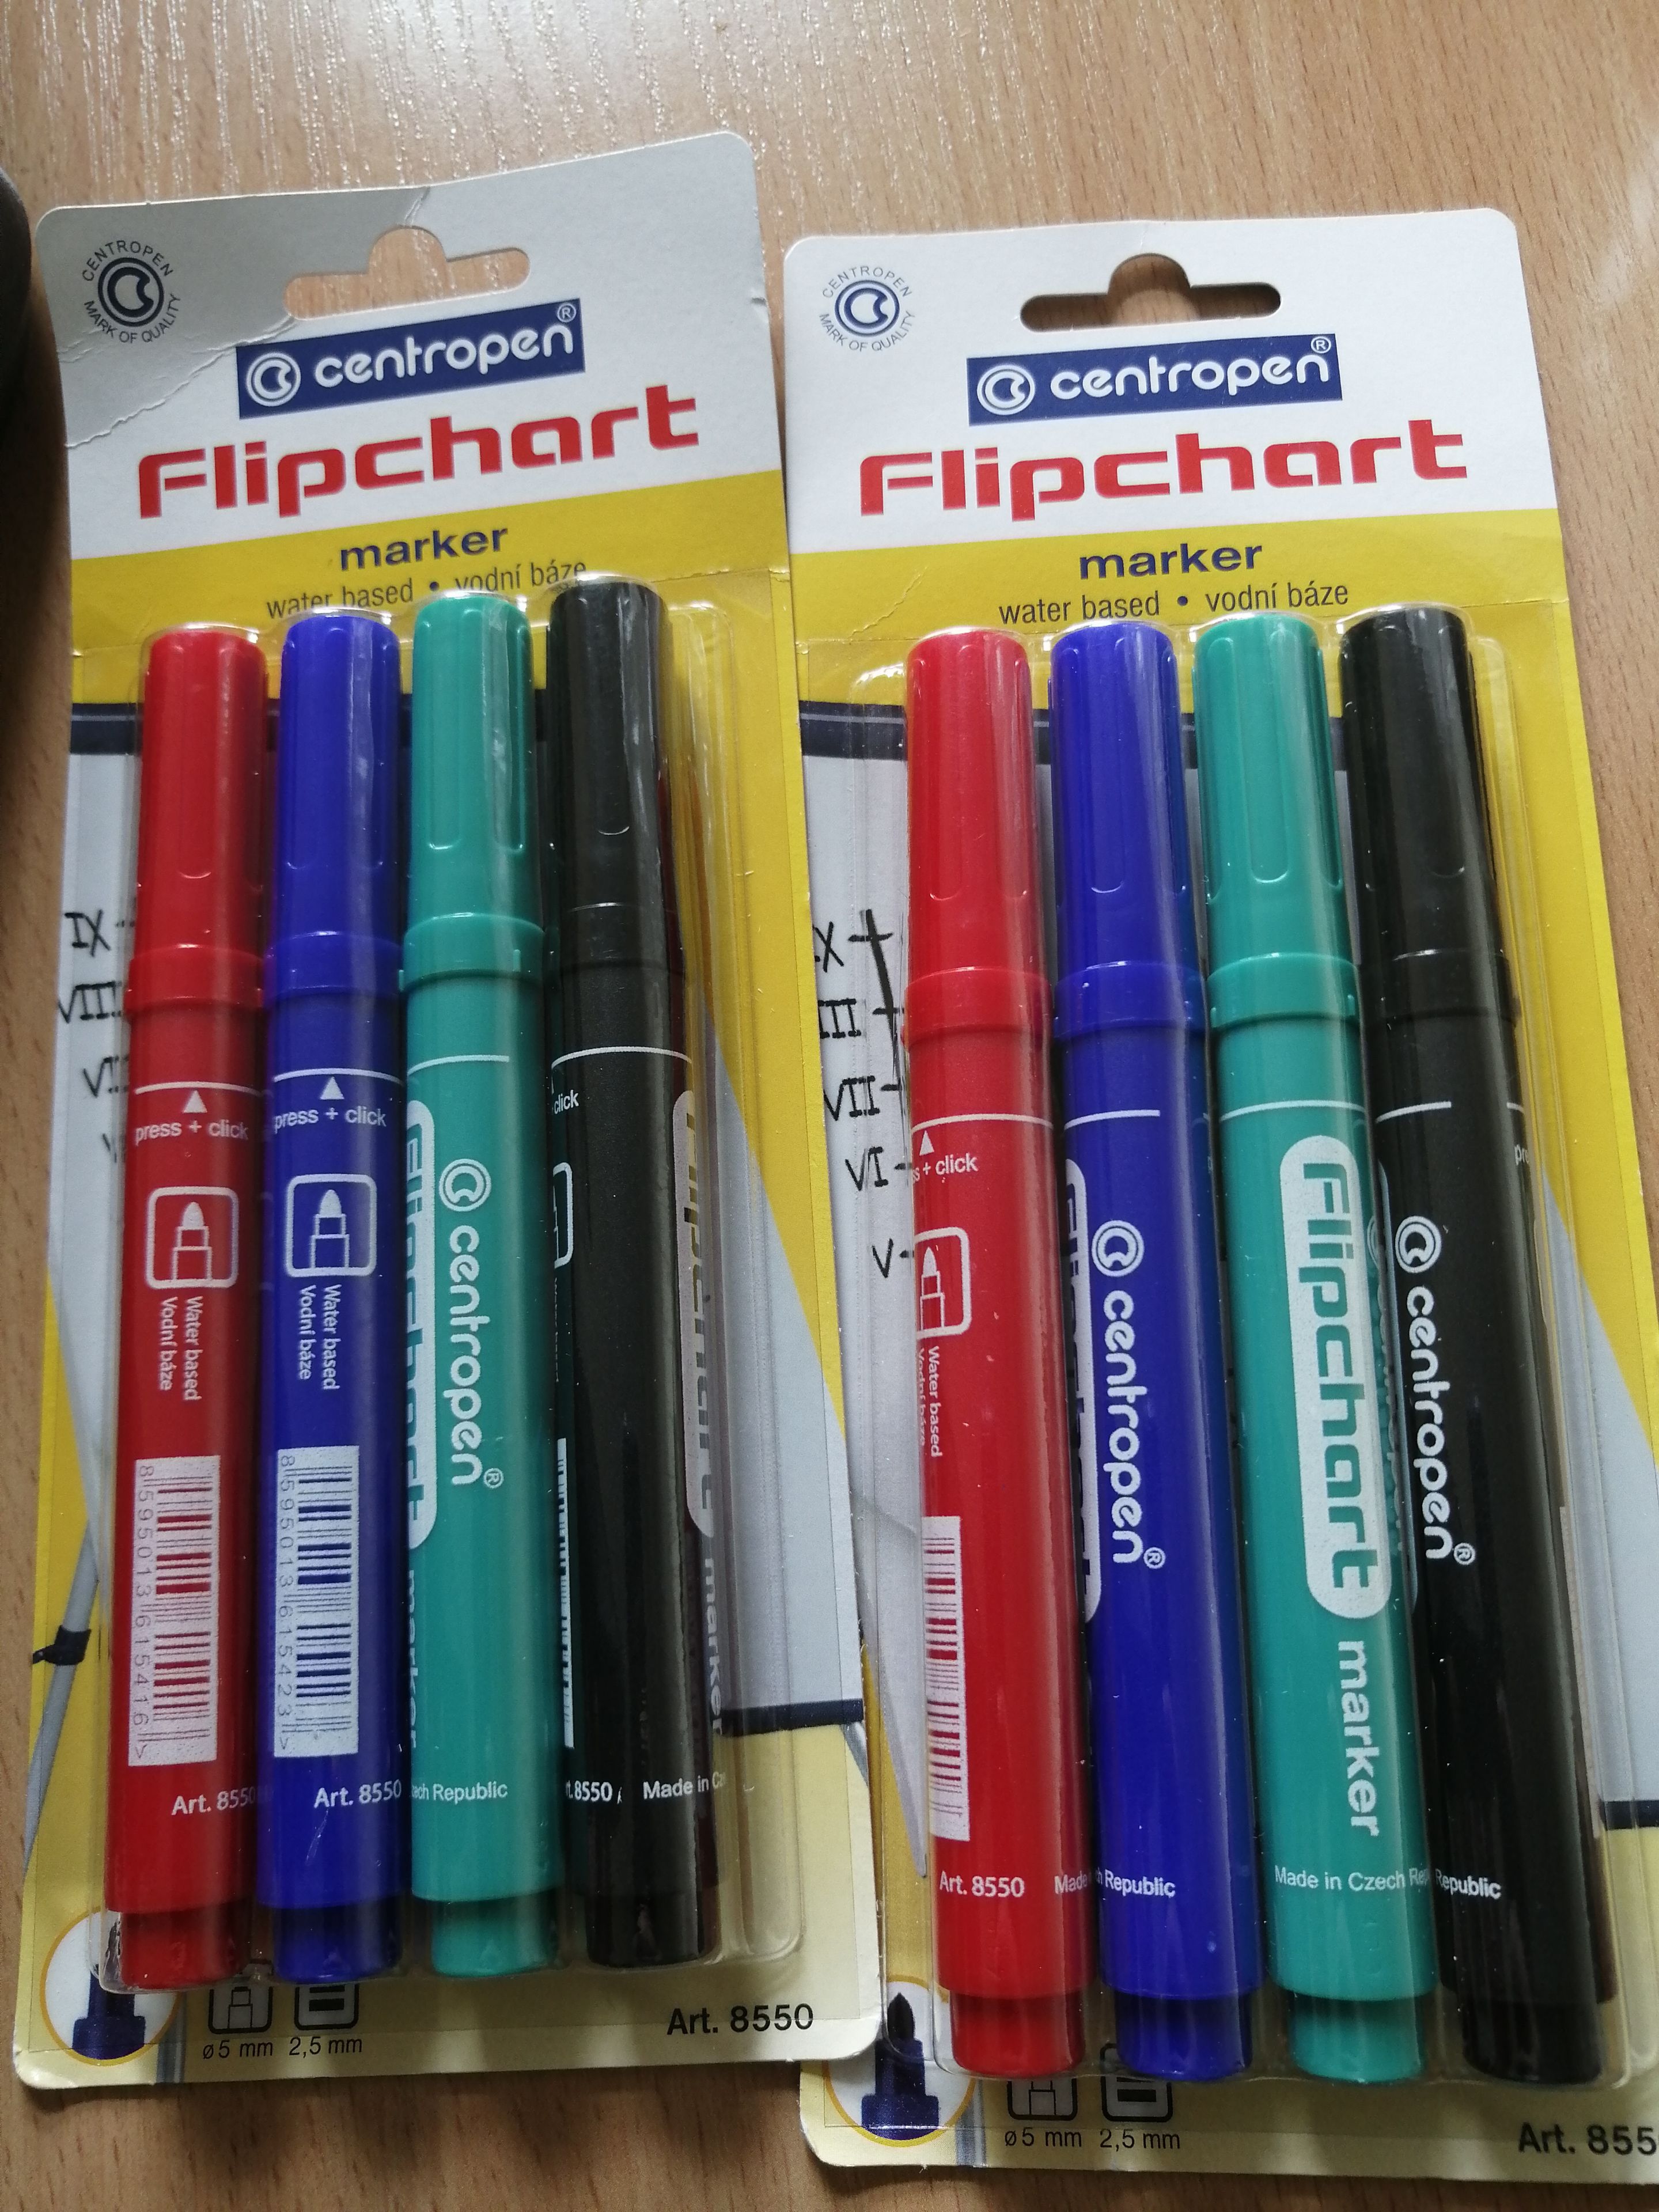 Marker for Flipchart, Centropen 8550, 2.5 mm Paint Markers Pens